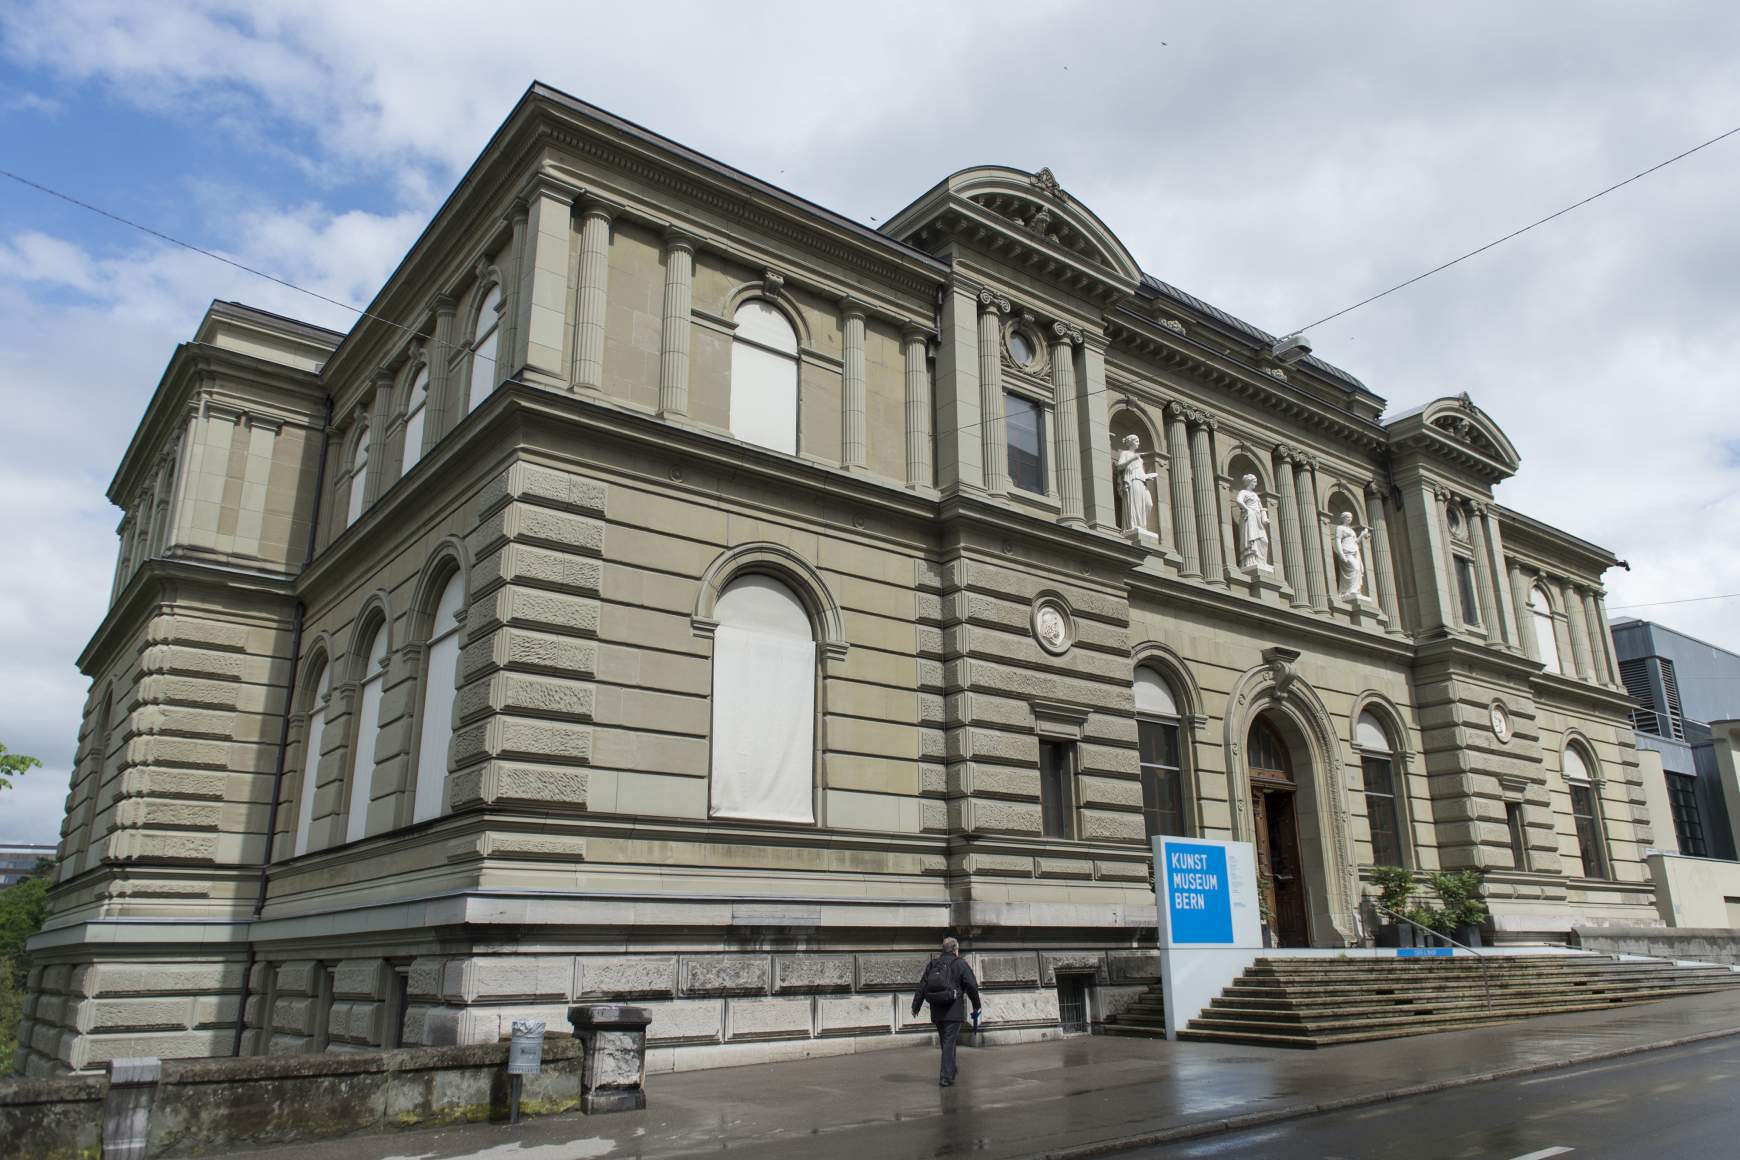 Kunstmuseum Bern